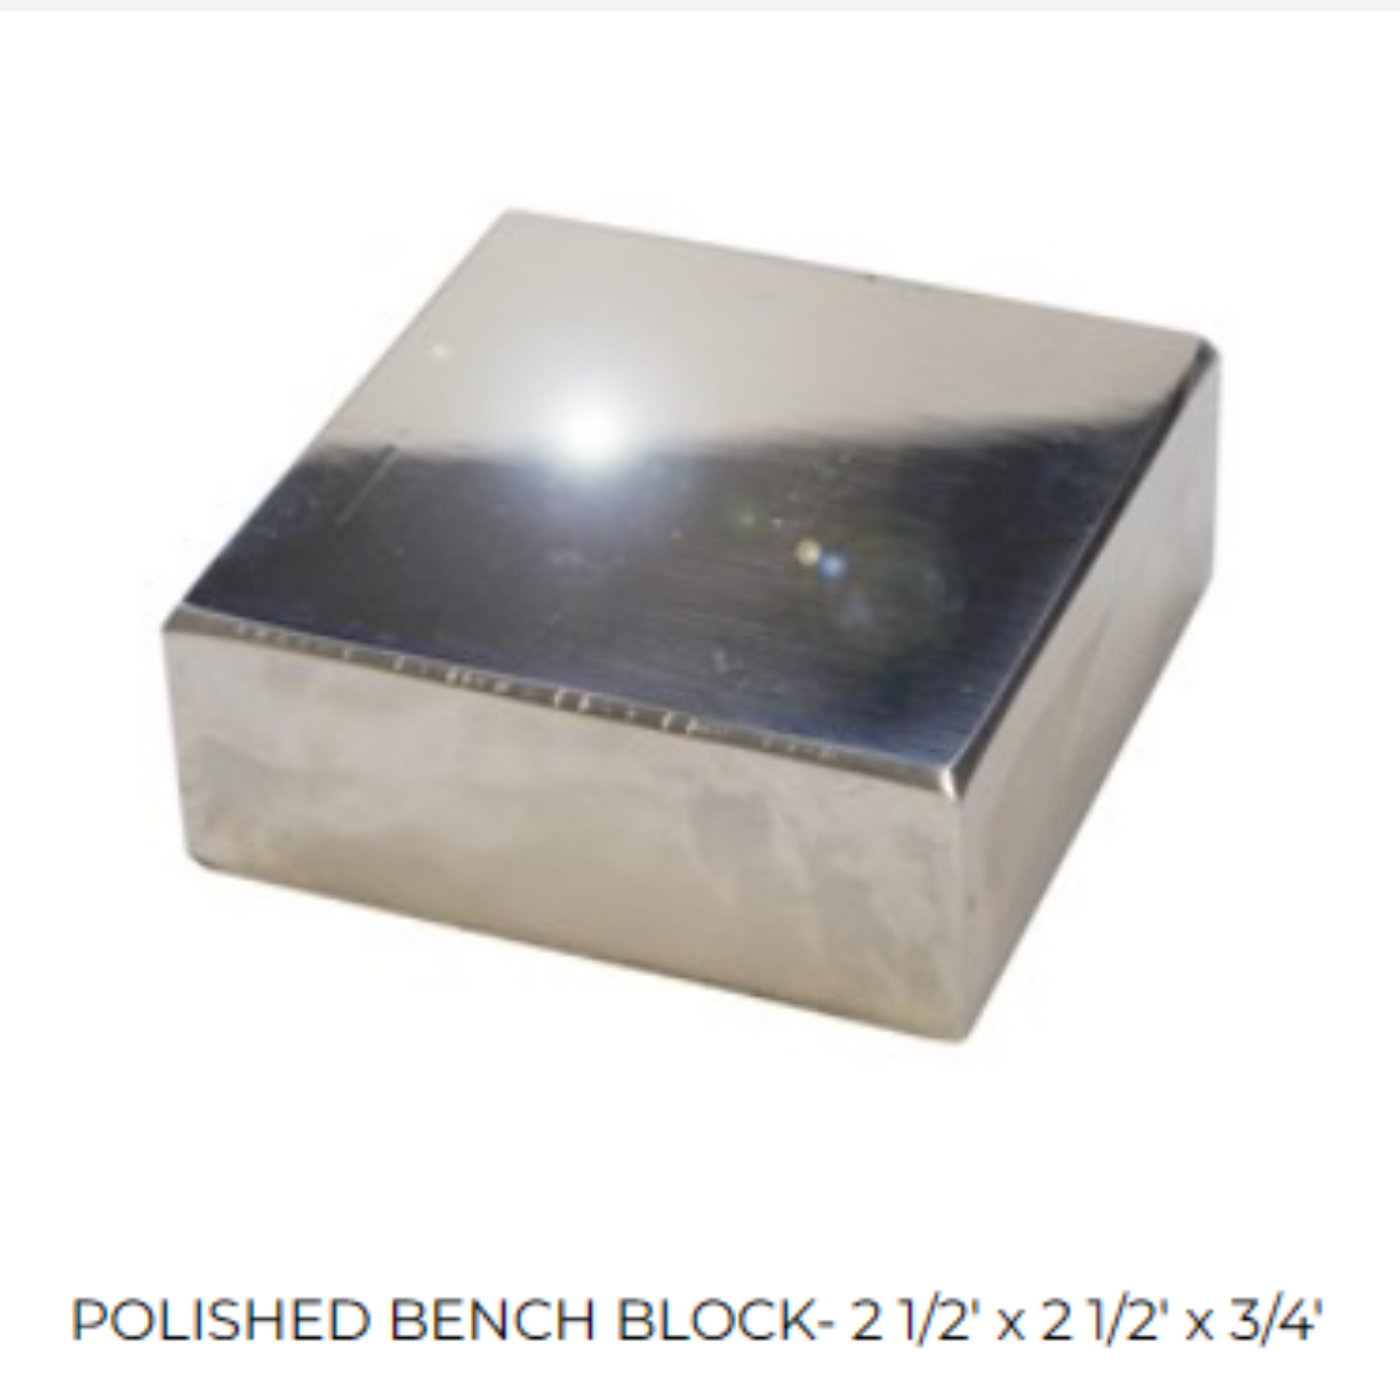 2 1/2" X 2 1/2" Polished Bench Block